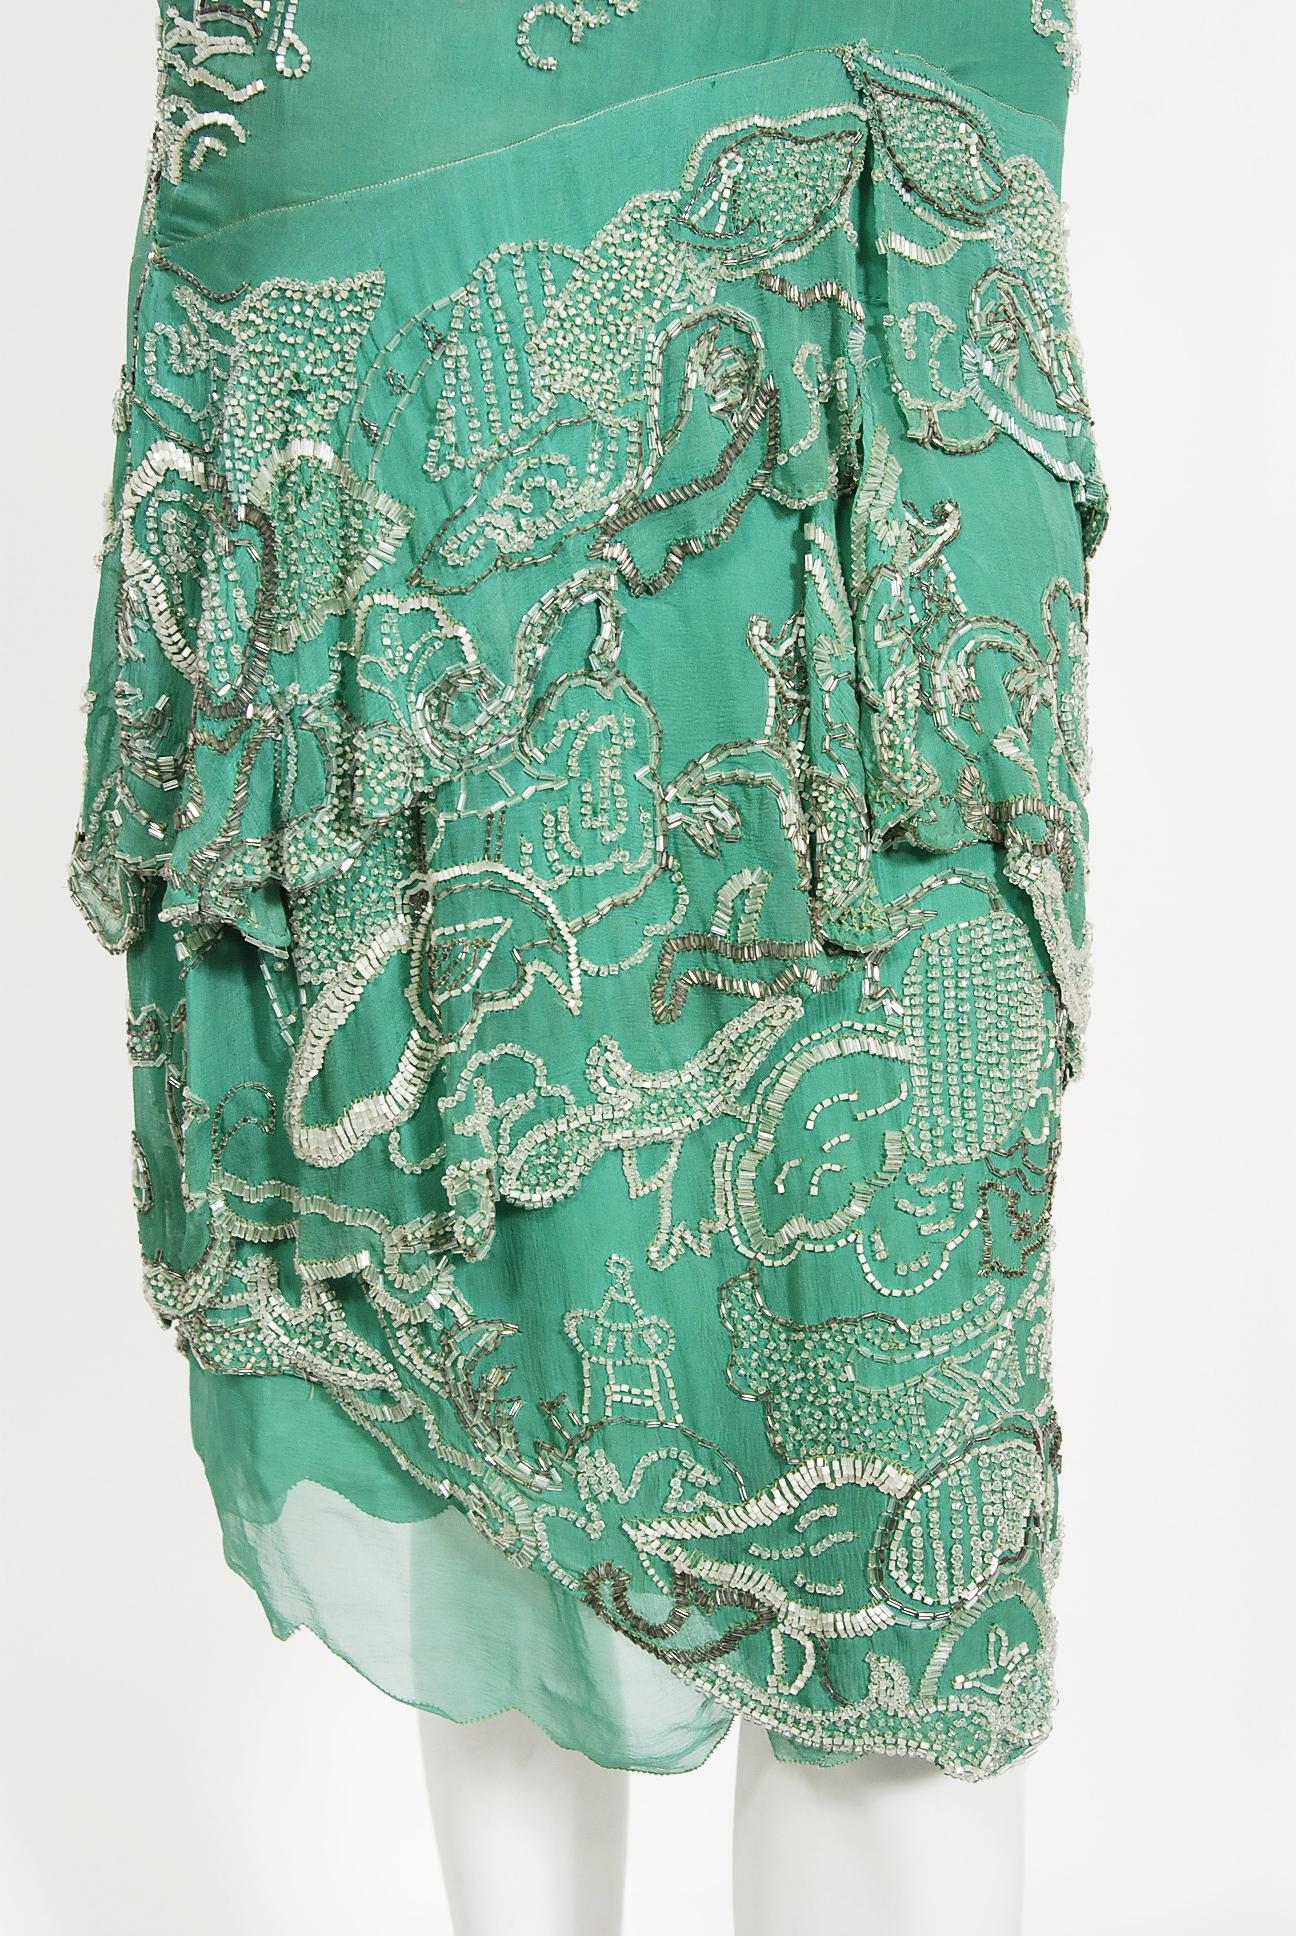 Vintage 1920's Jean Patou Haute Couture Attributed Seafoam Beaded Chiffon Dress  2